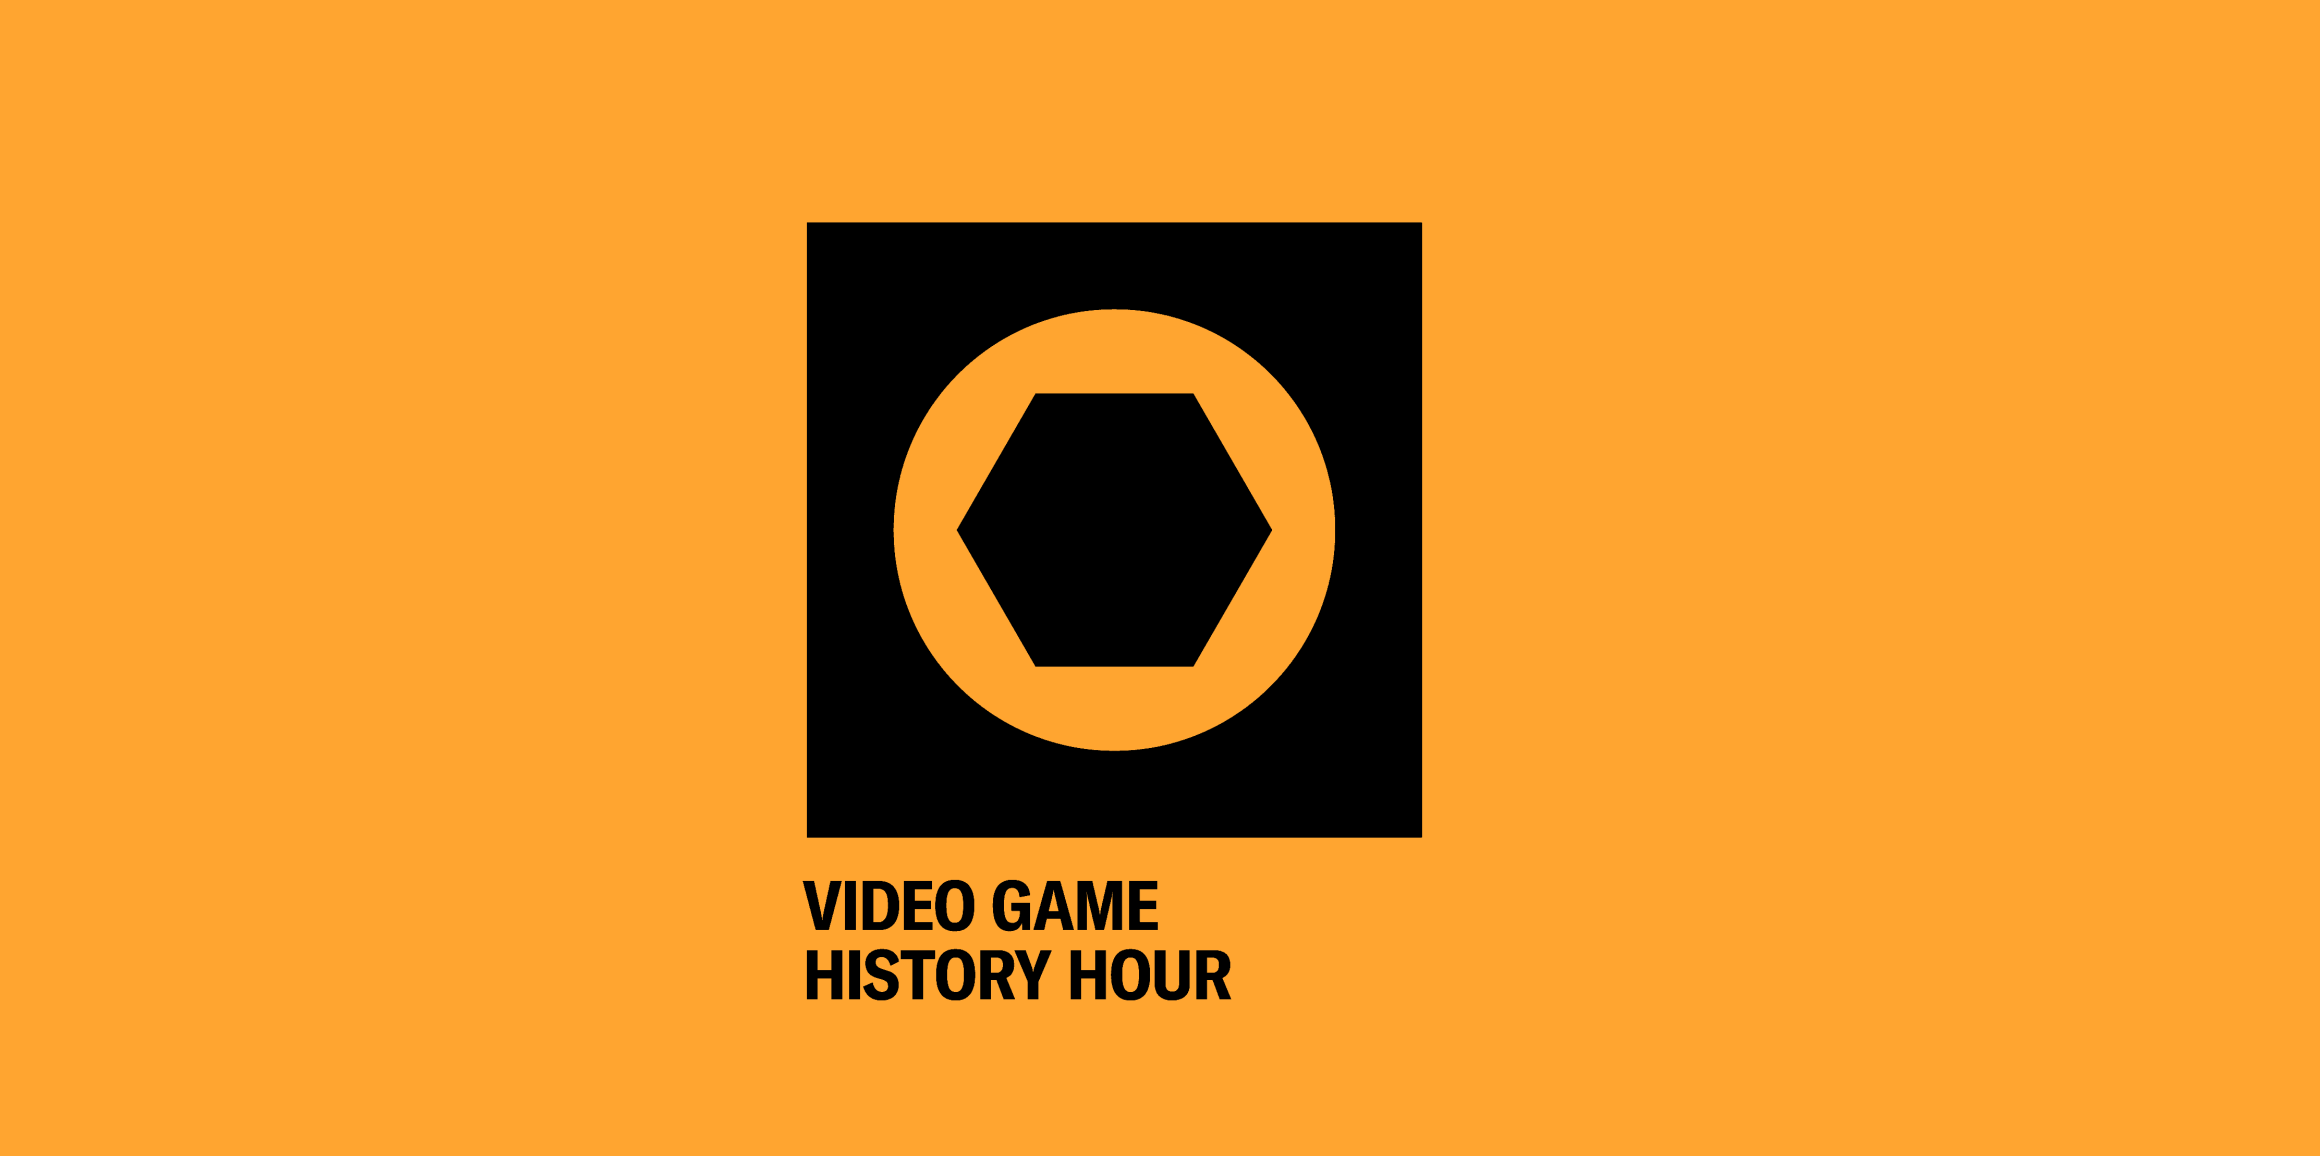 Noclip - Video Game Documentaries 